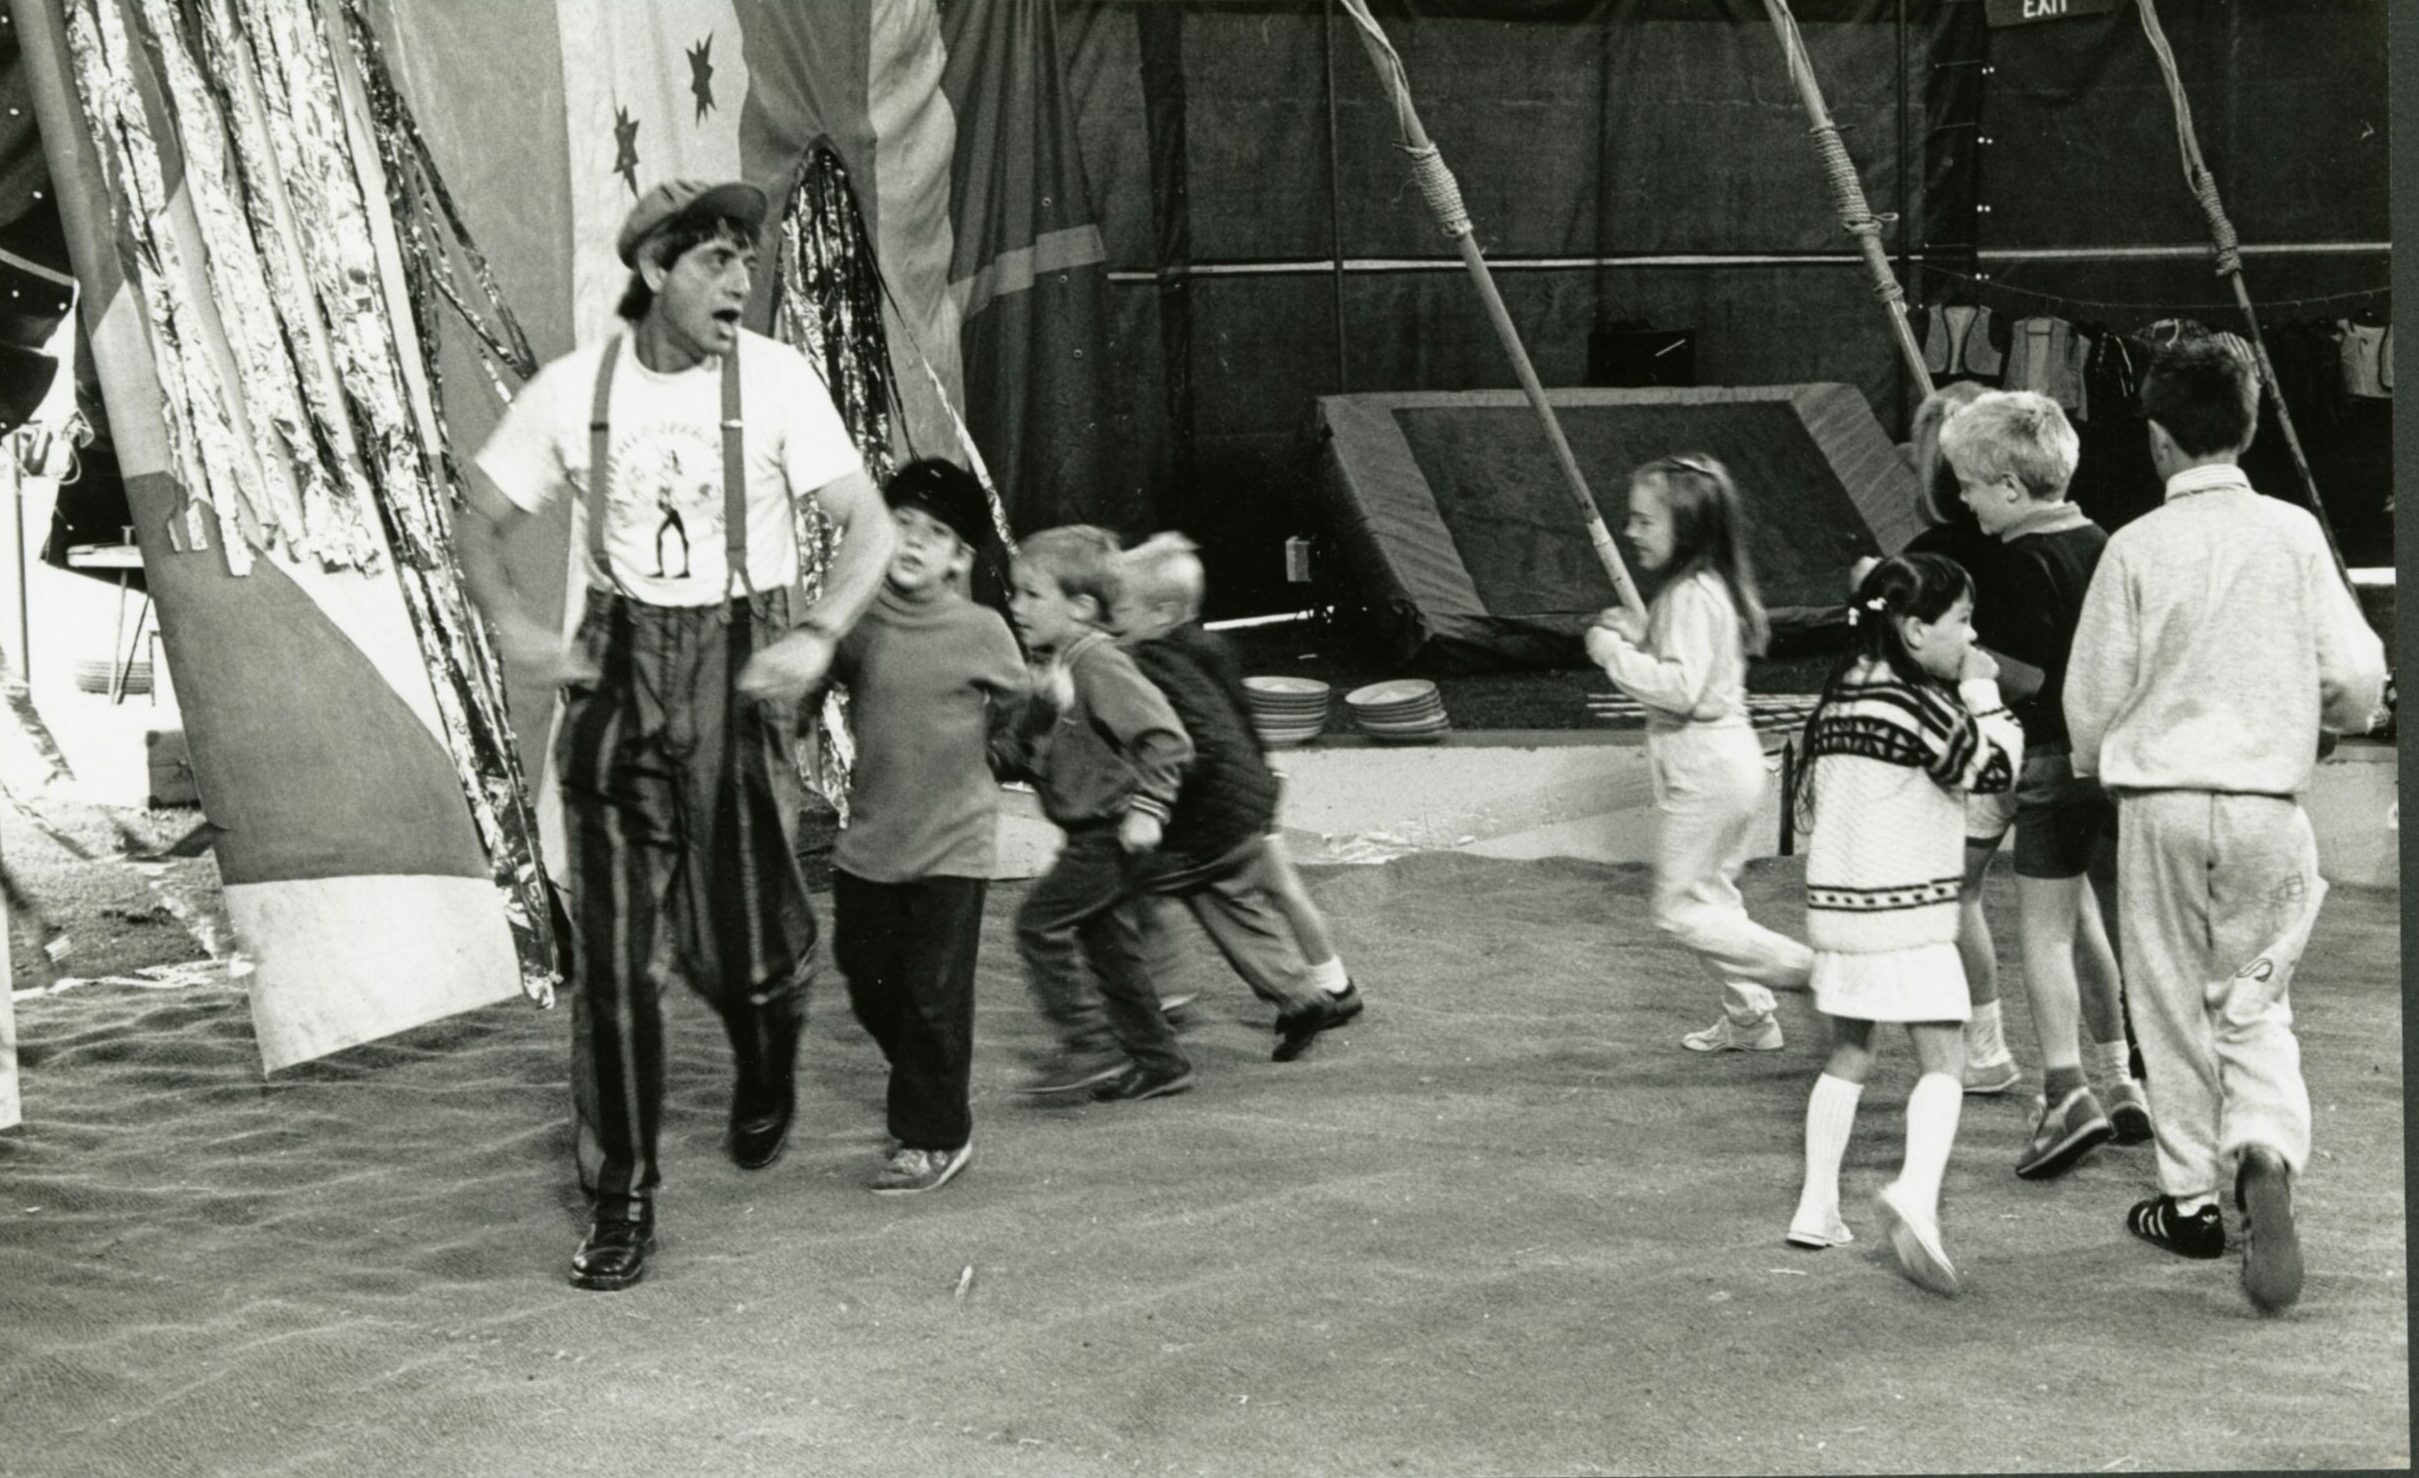 Children follow a performer around inside the Circus Big Top